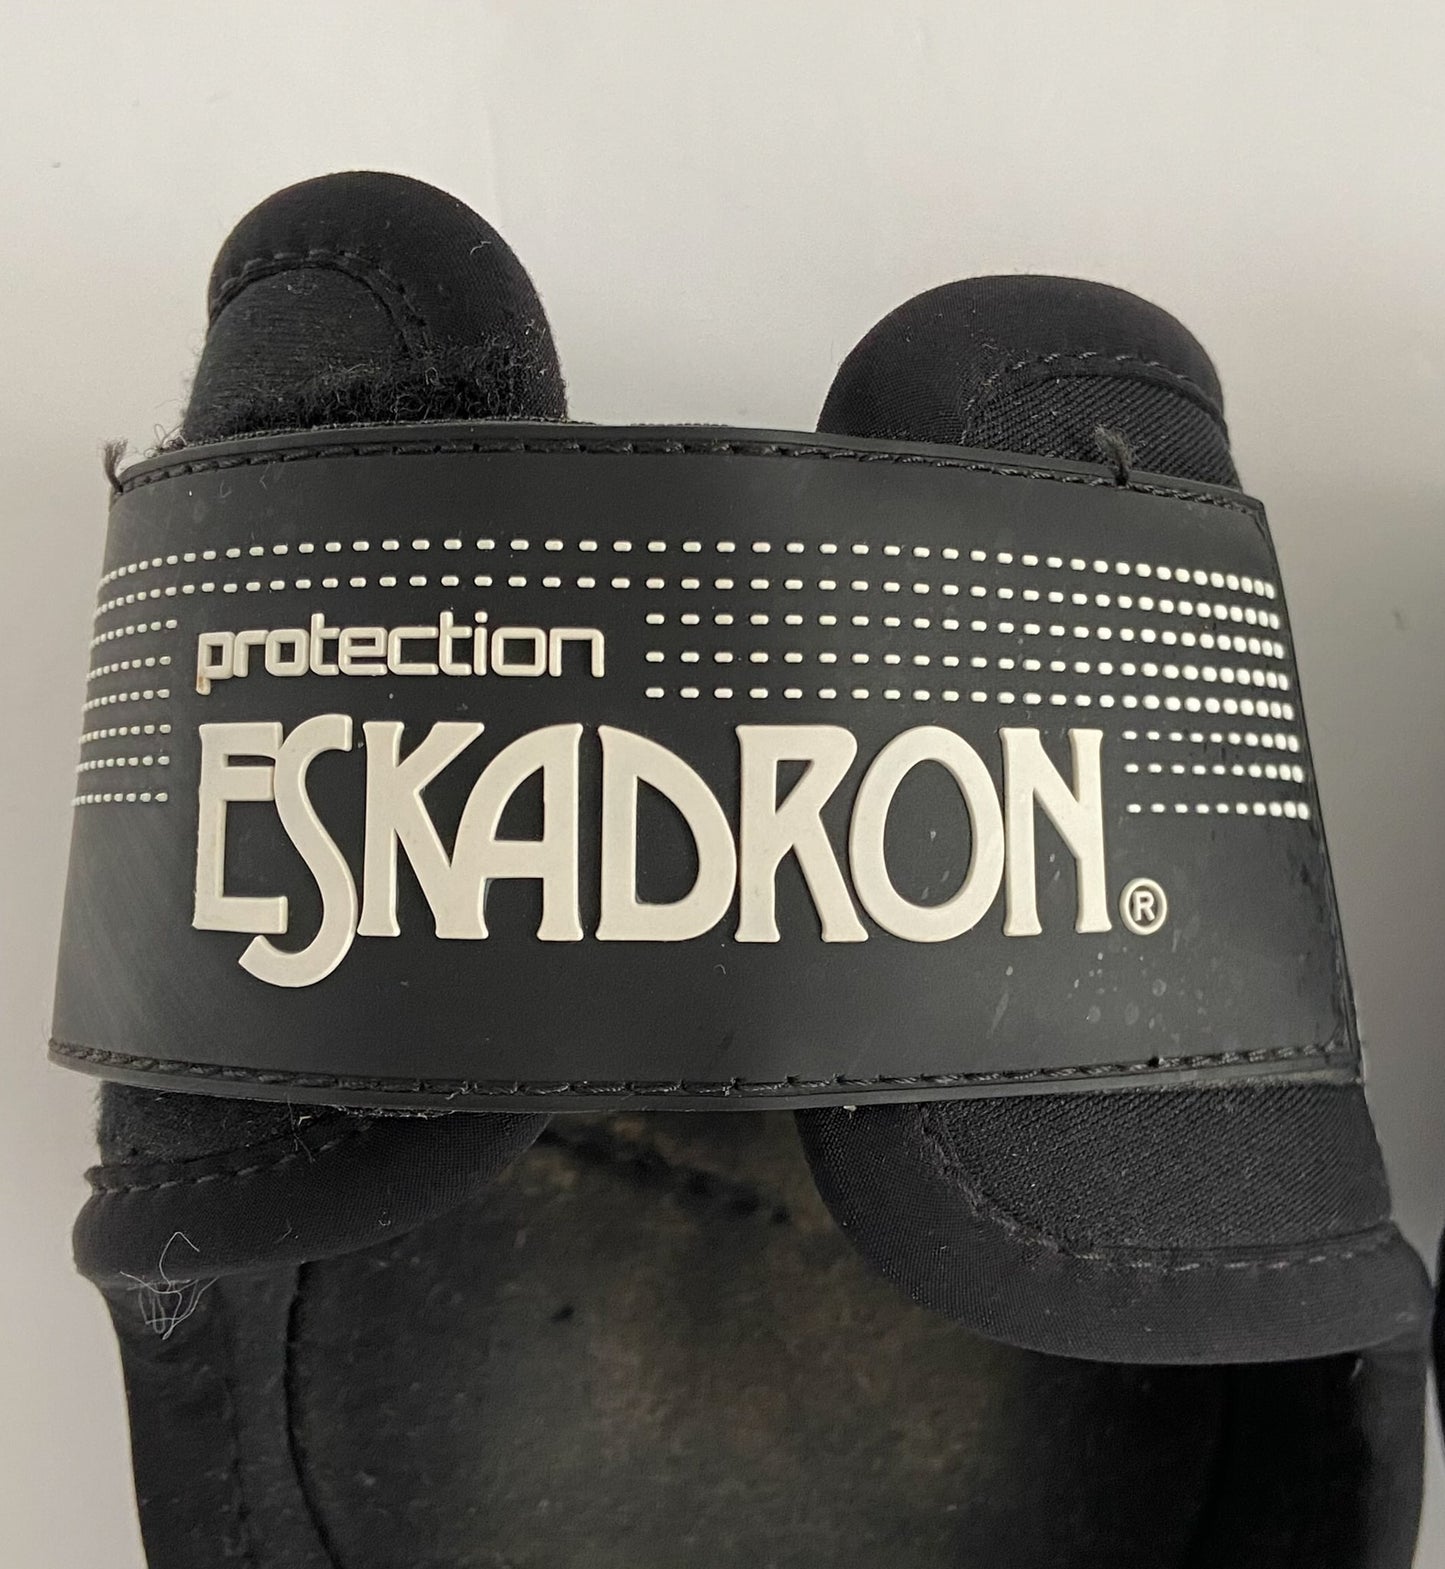 Eskadron Protection Fetlock Boots - Black - Full